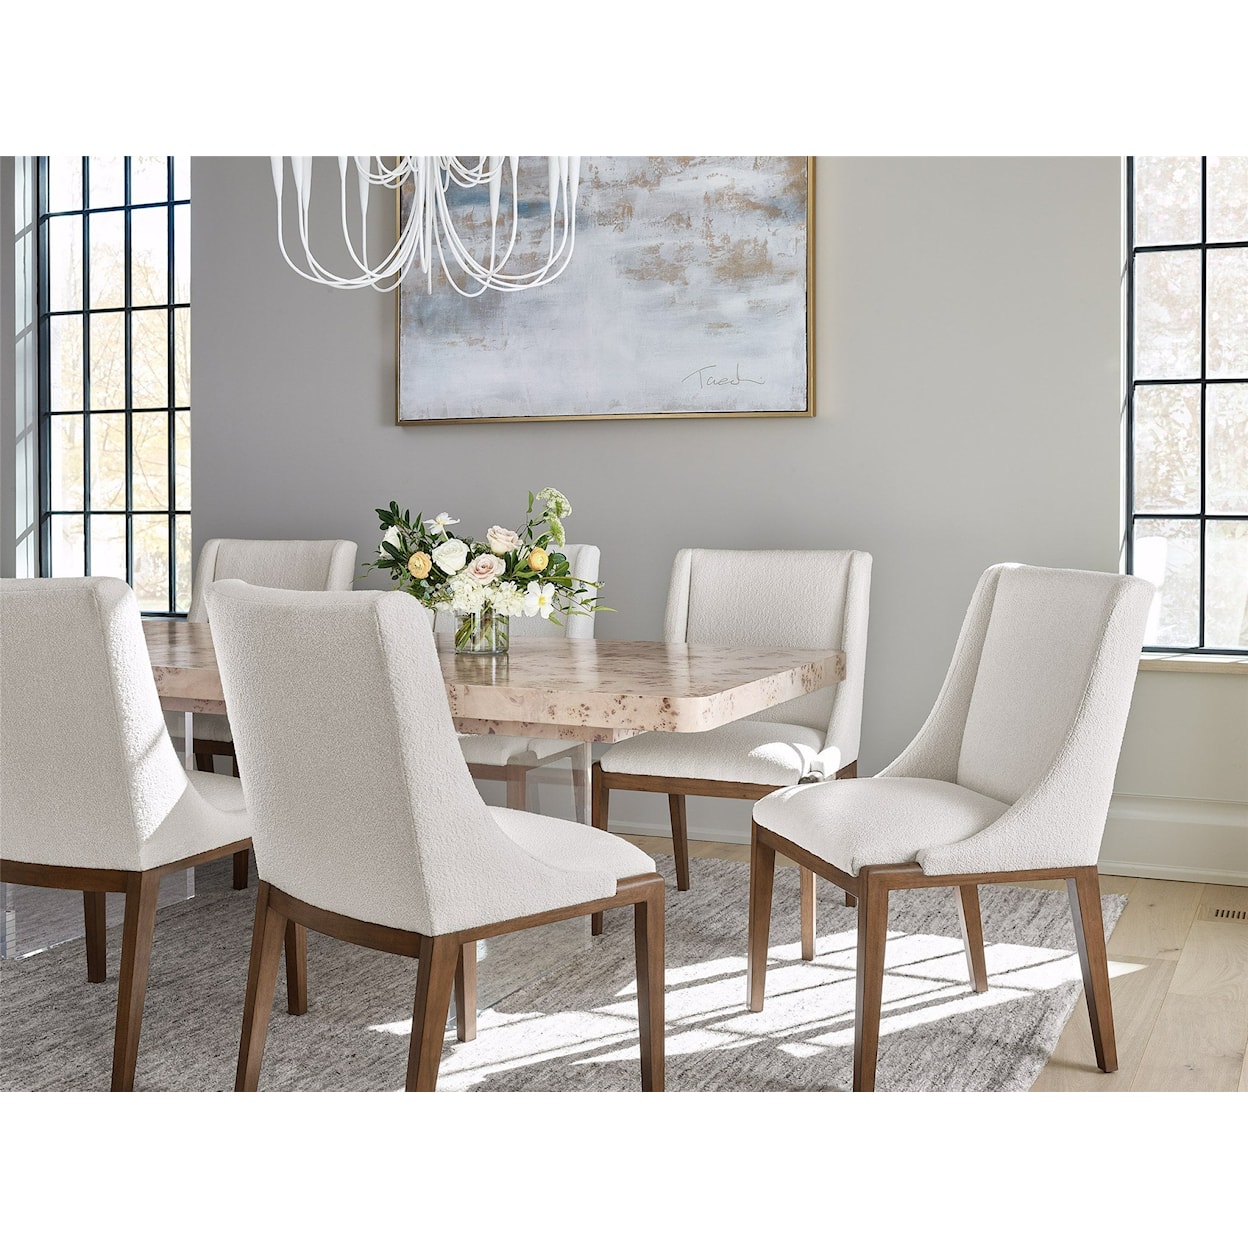 Universal Tranquility - Miranda Kerr Home Dining Chair